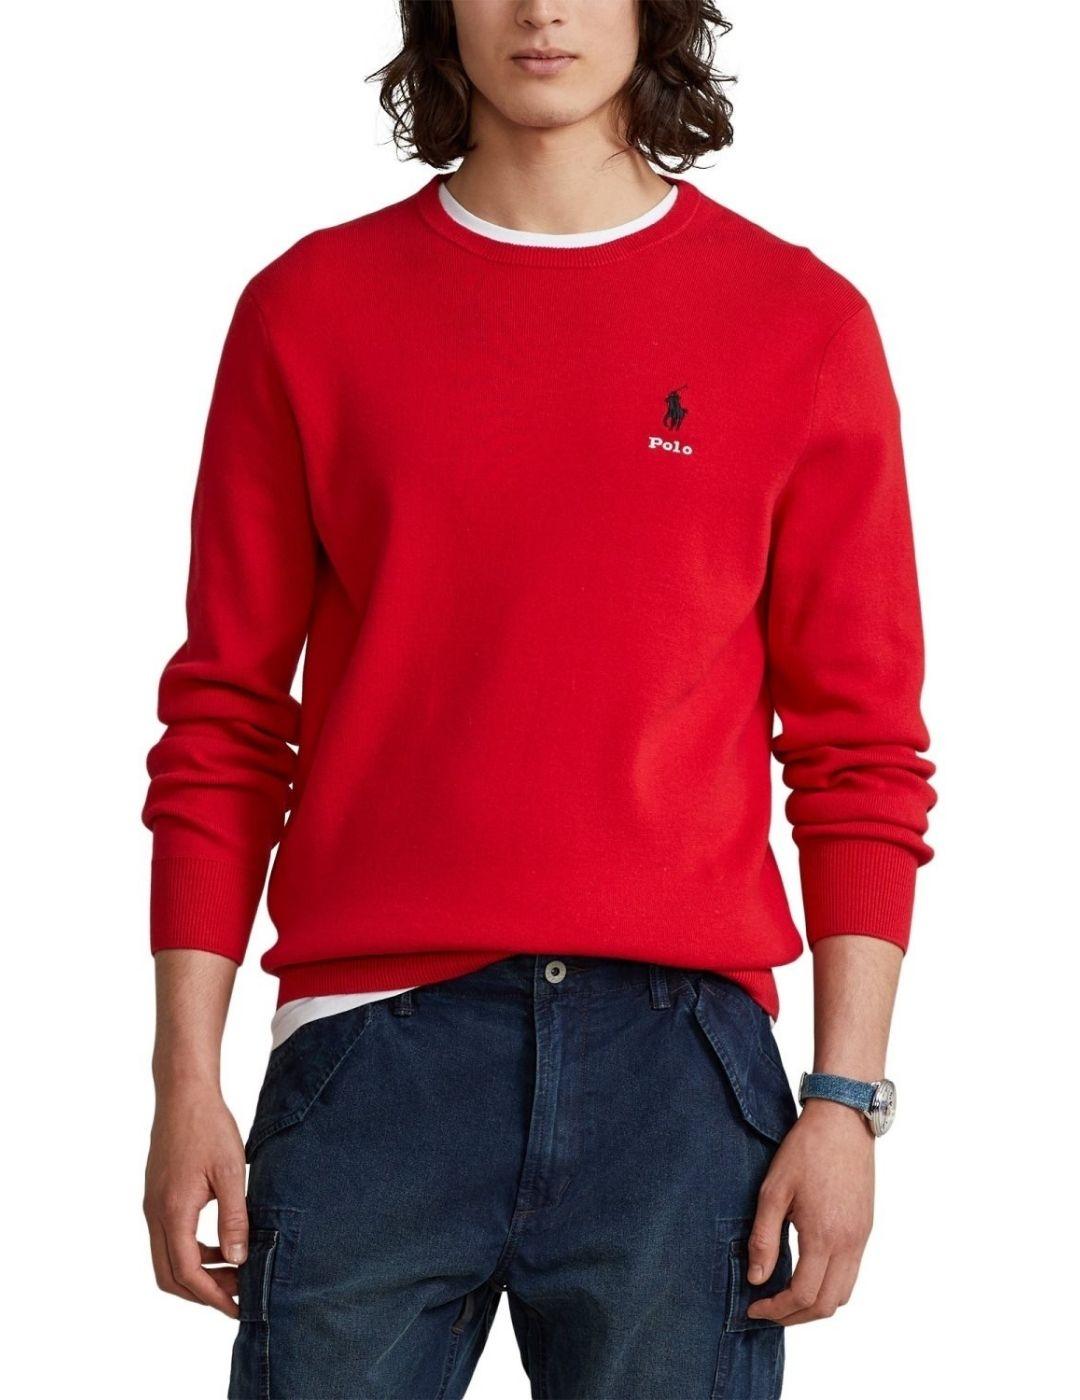 Jersey Polo Ralph Lauren de algodón rojo